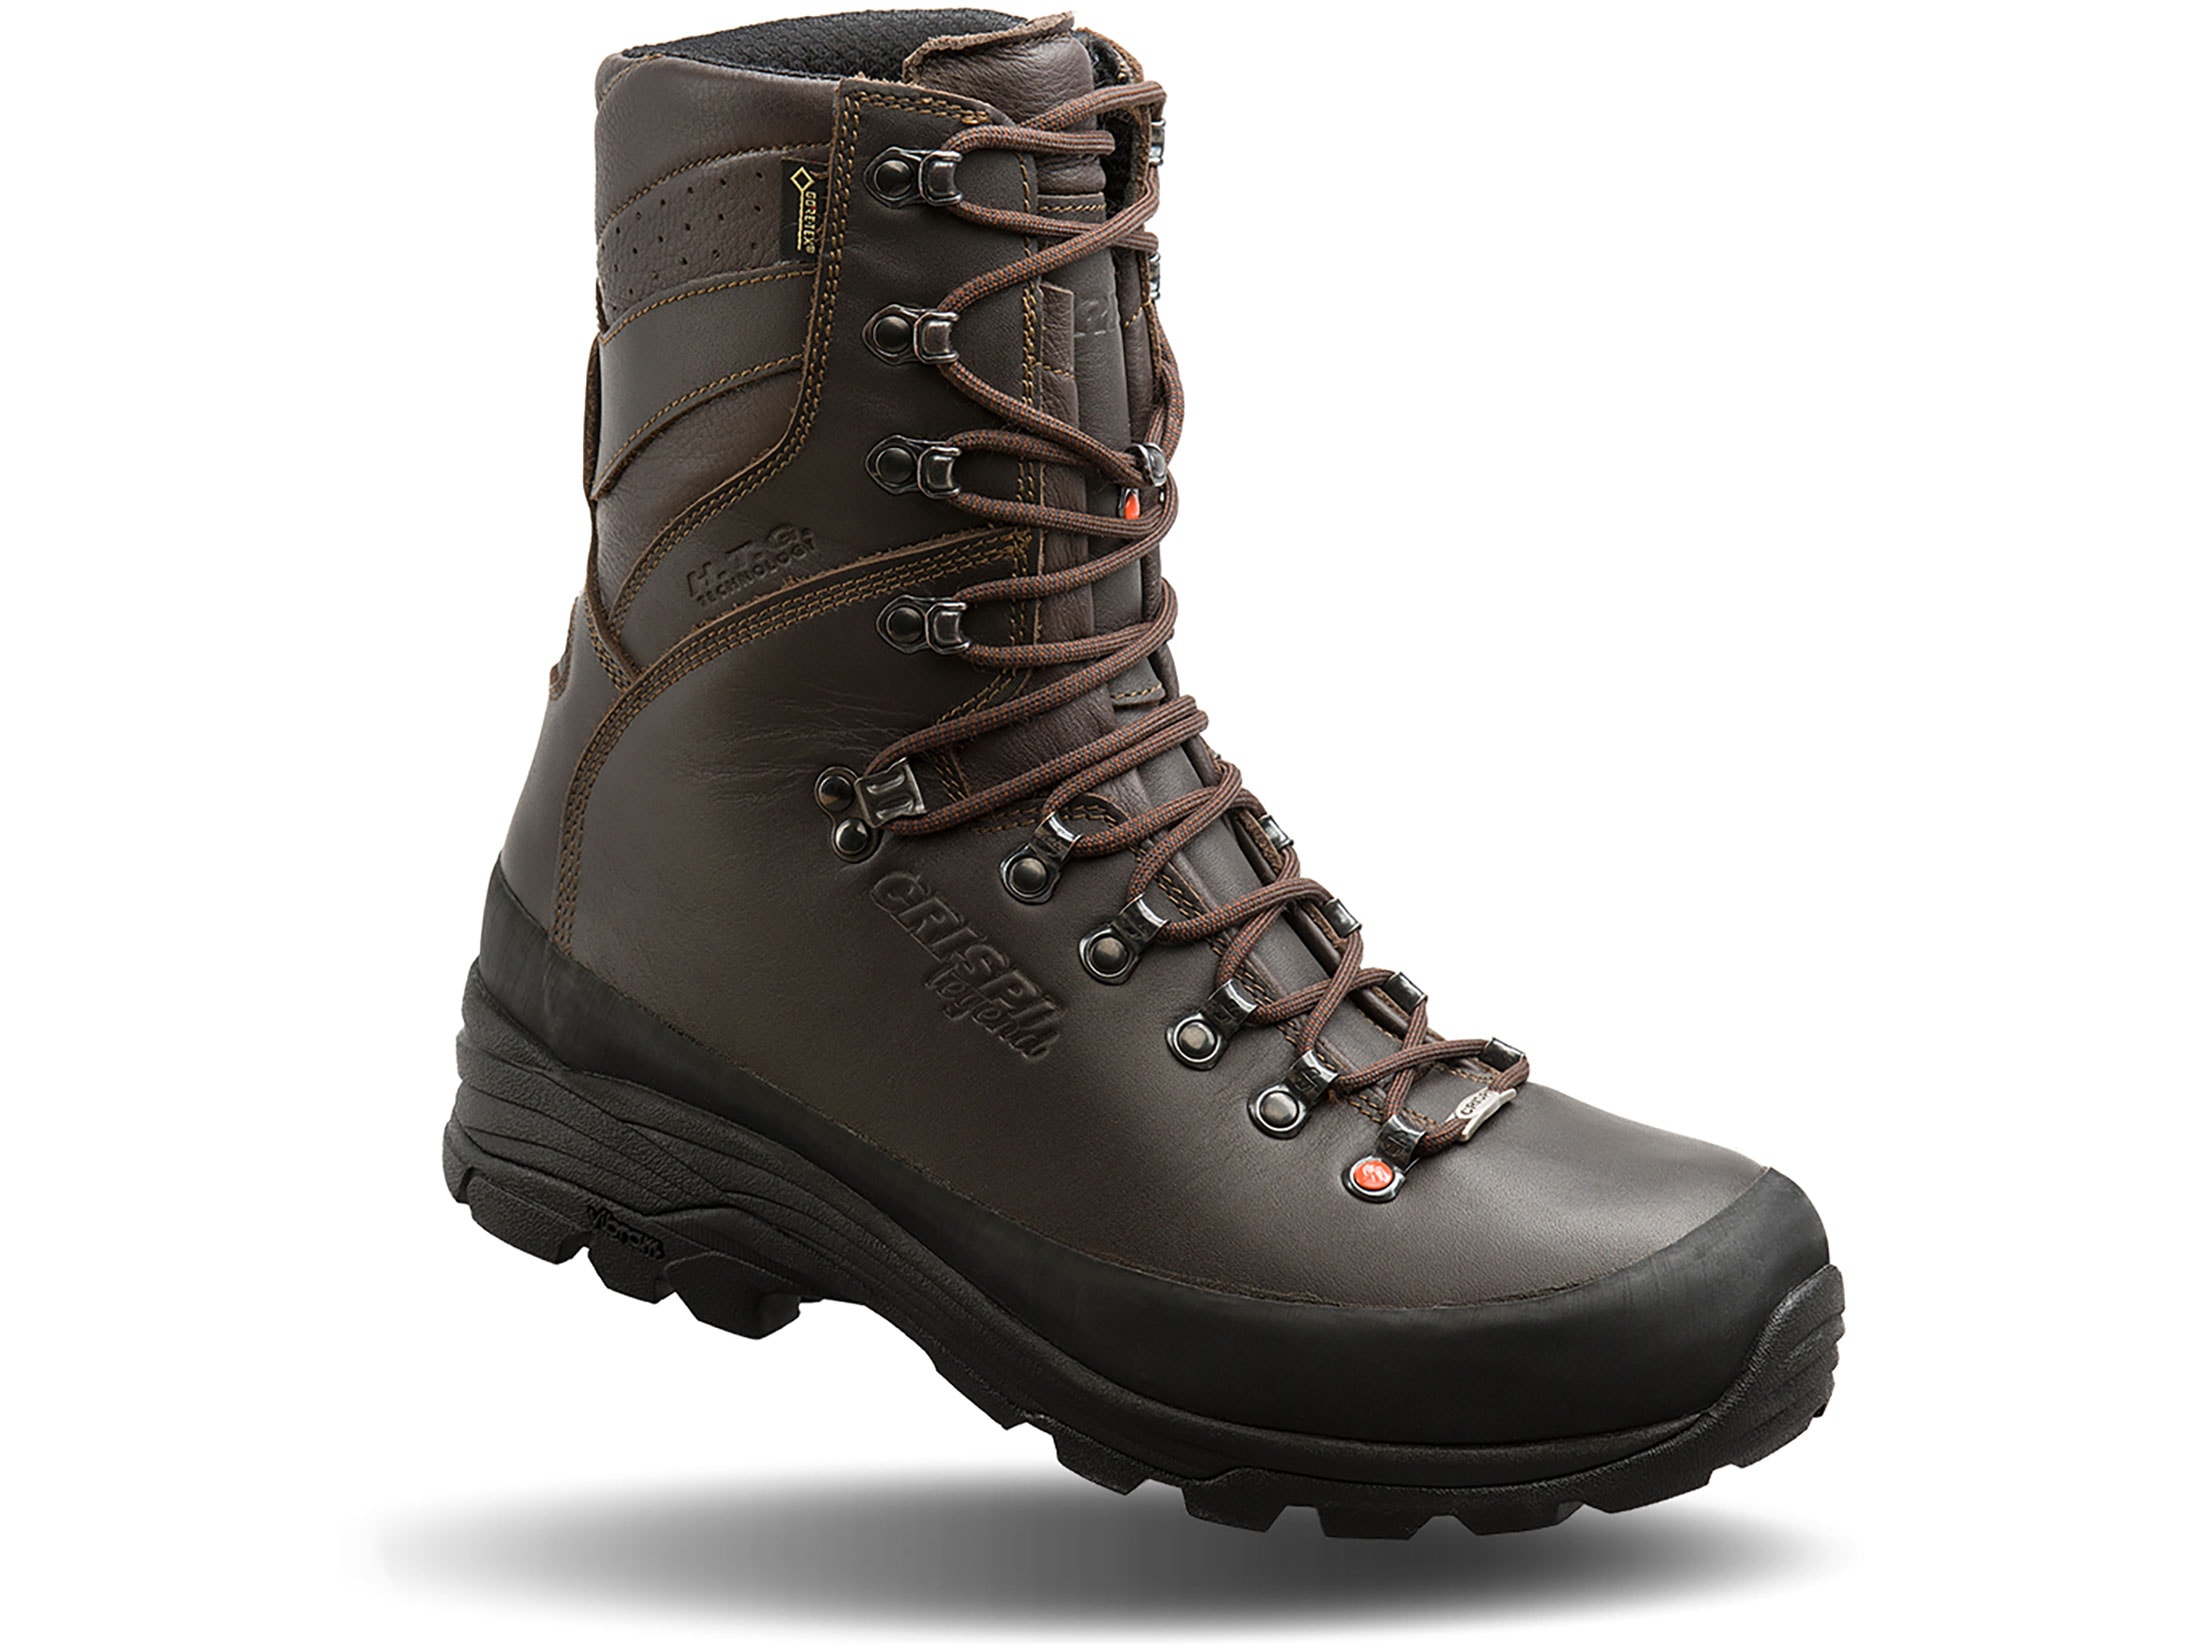 Crispi Wild Rock GTX 10 GORE-TEX Hunting Boots Leather Brown Men's 9 D